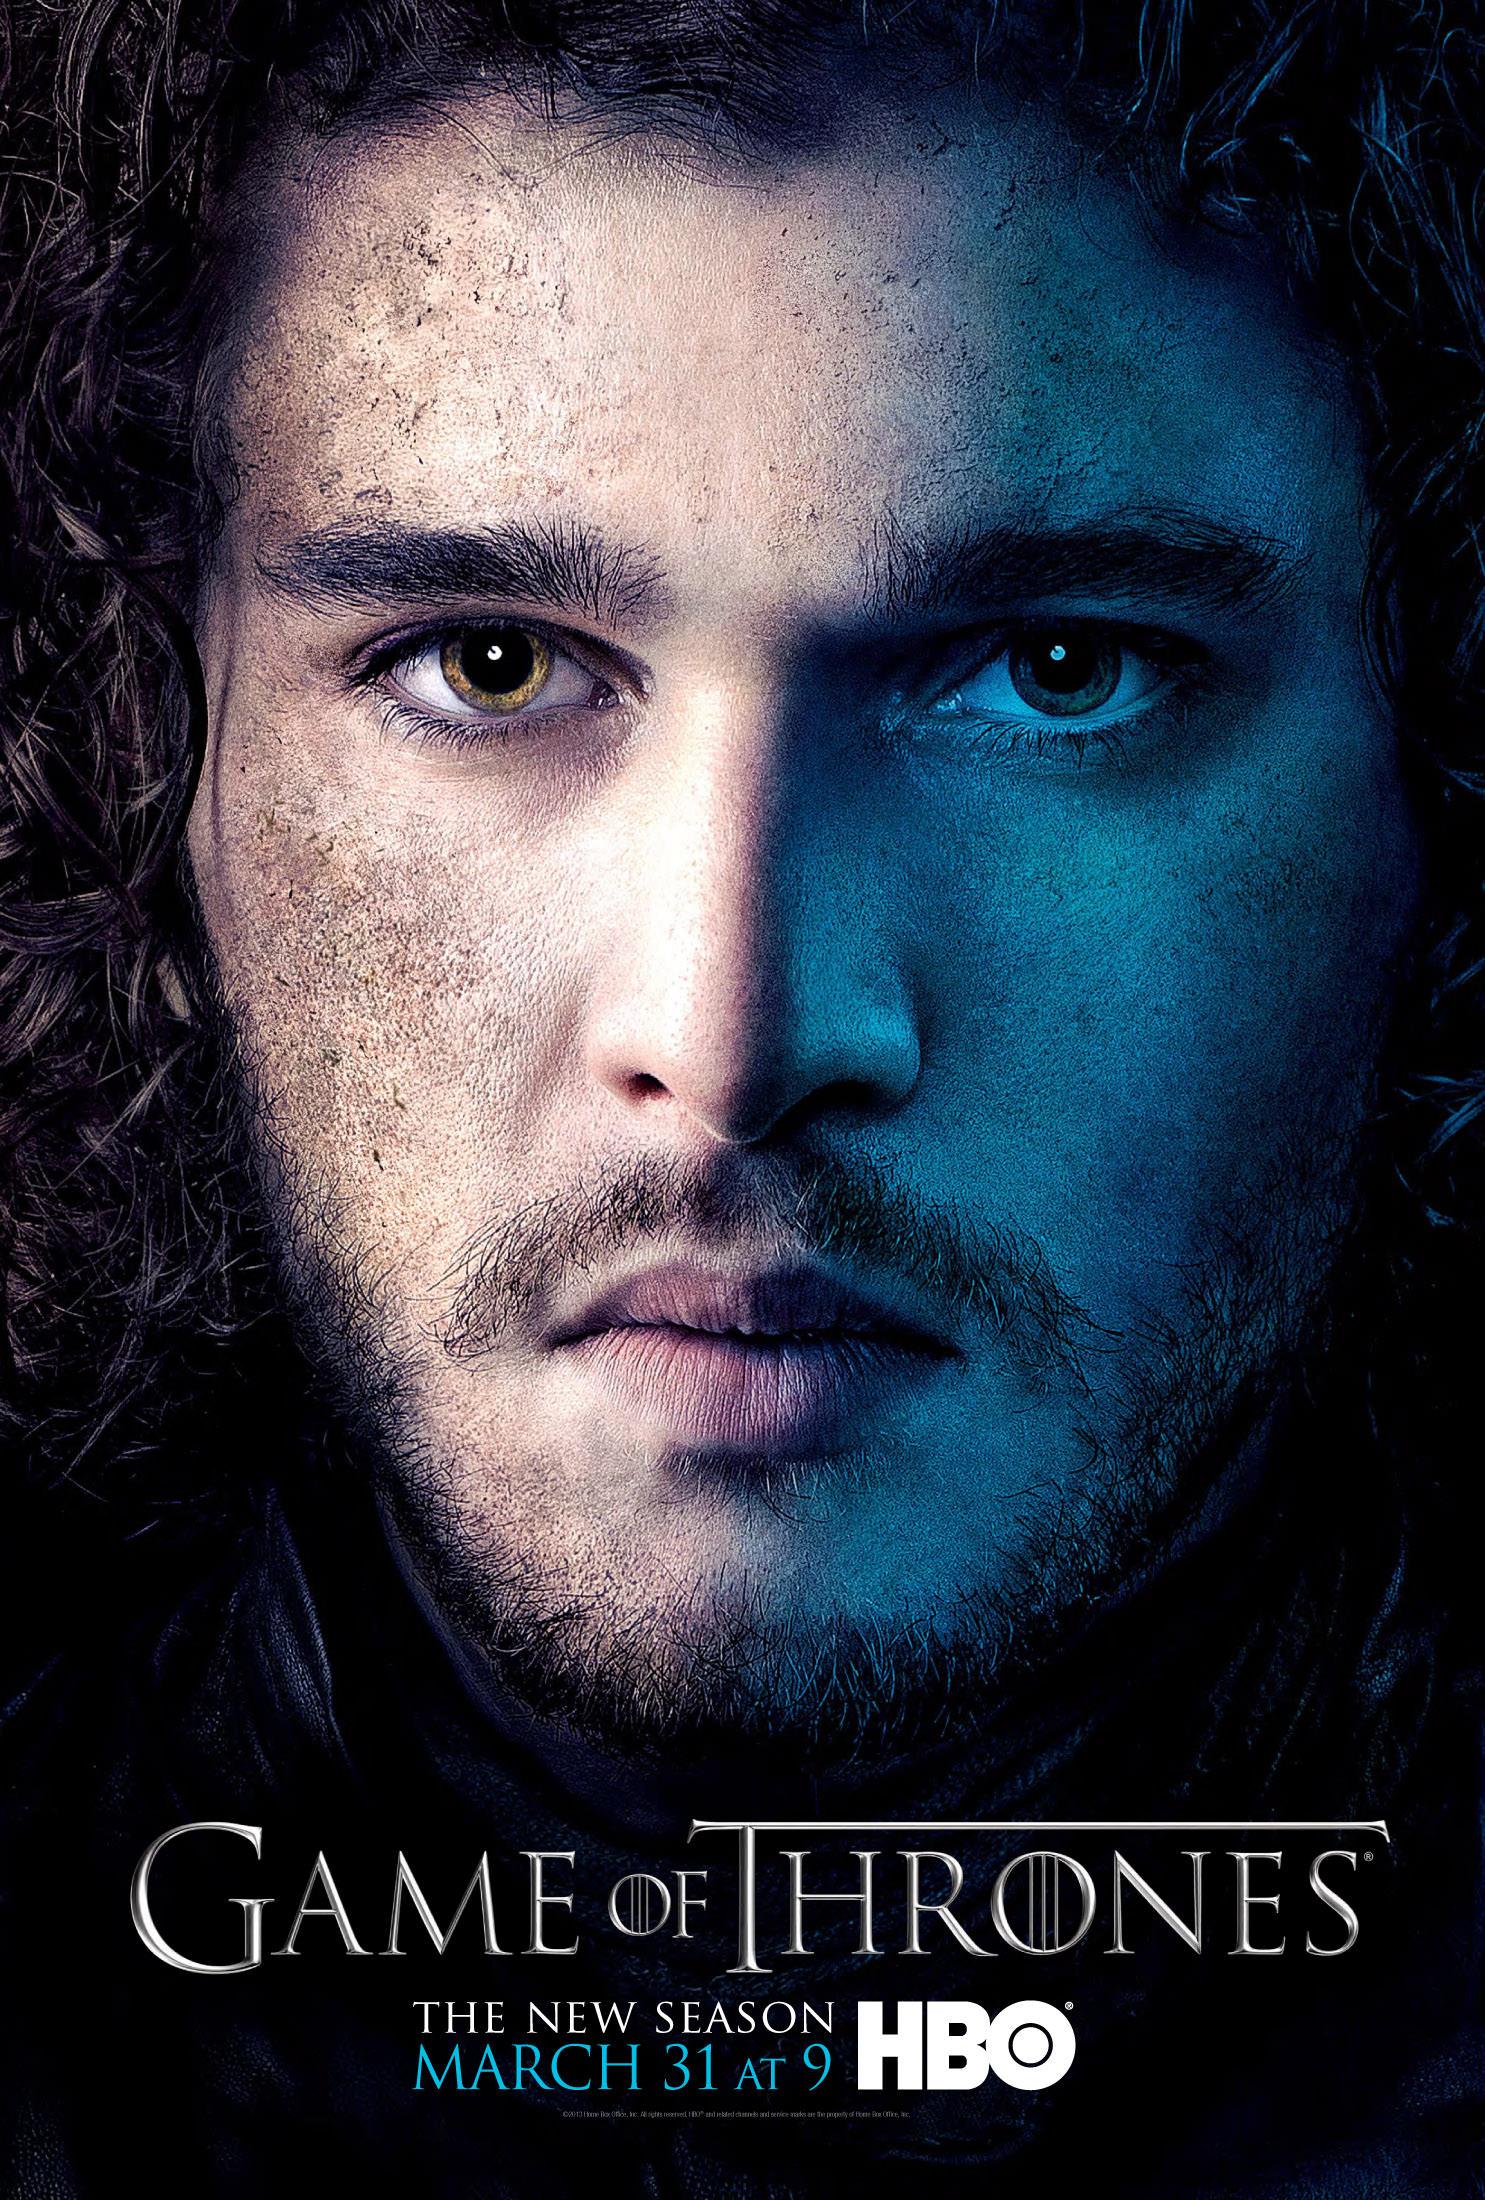 Jon-Snow-Game-Thrones-season-three-poster